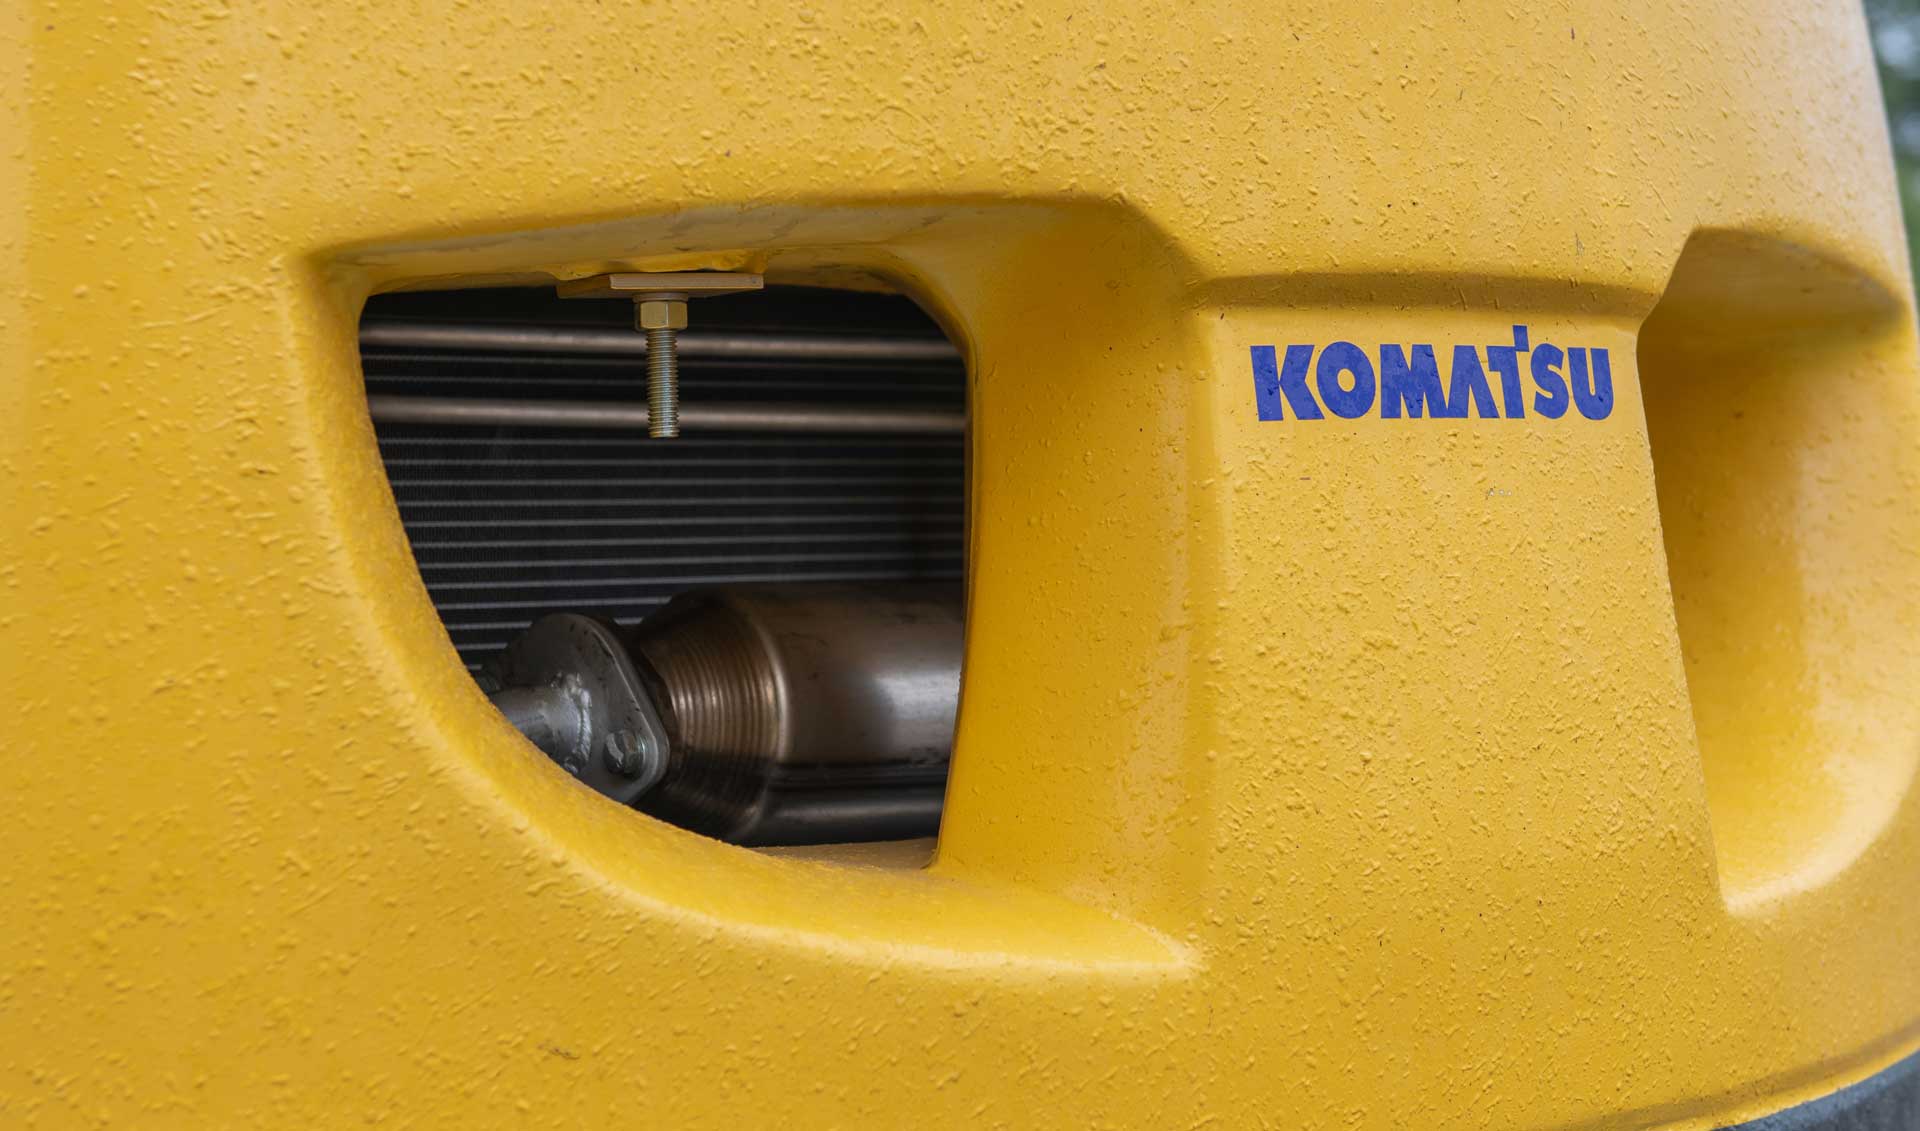 The Lilly Company Komatsu IC Forklifts